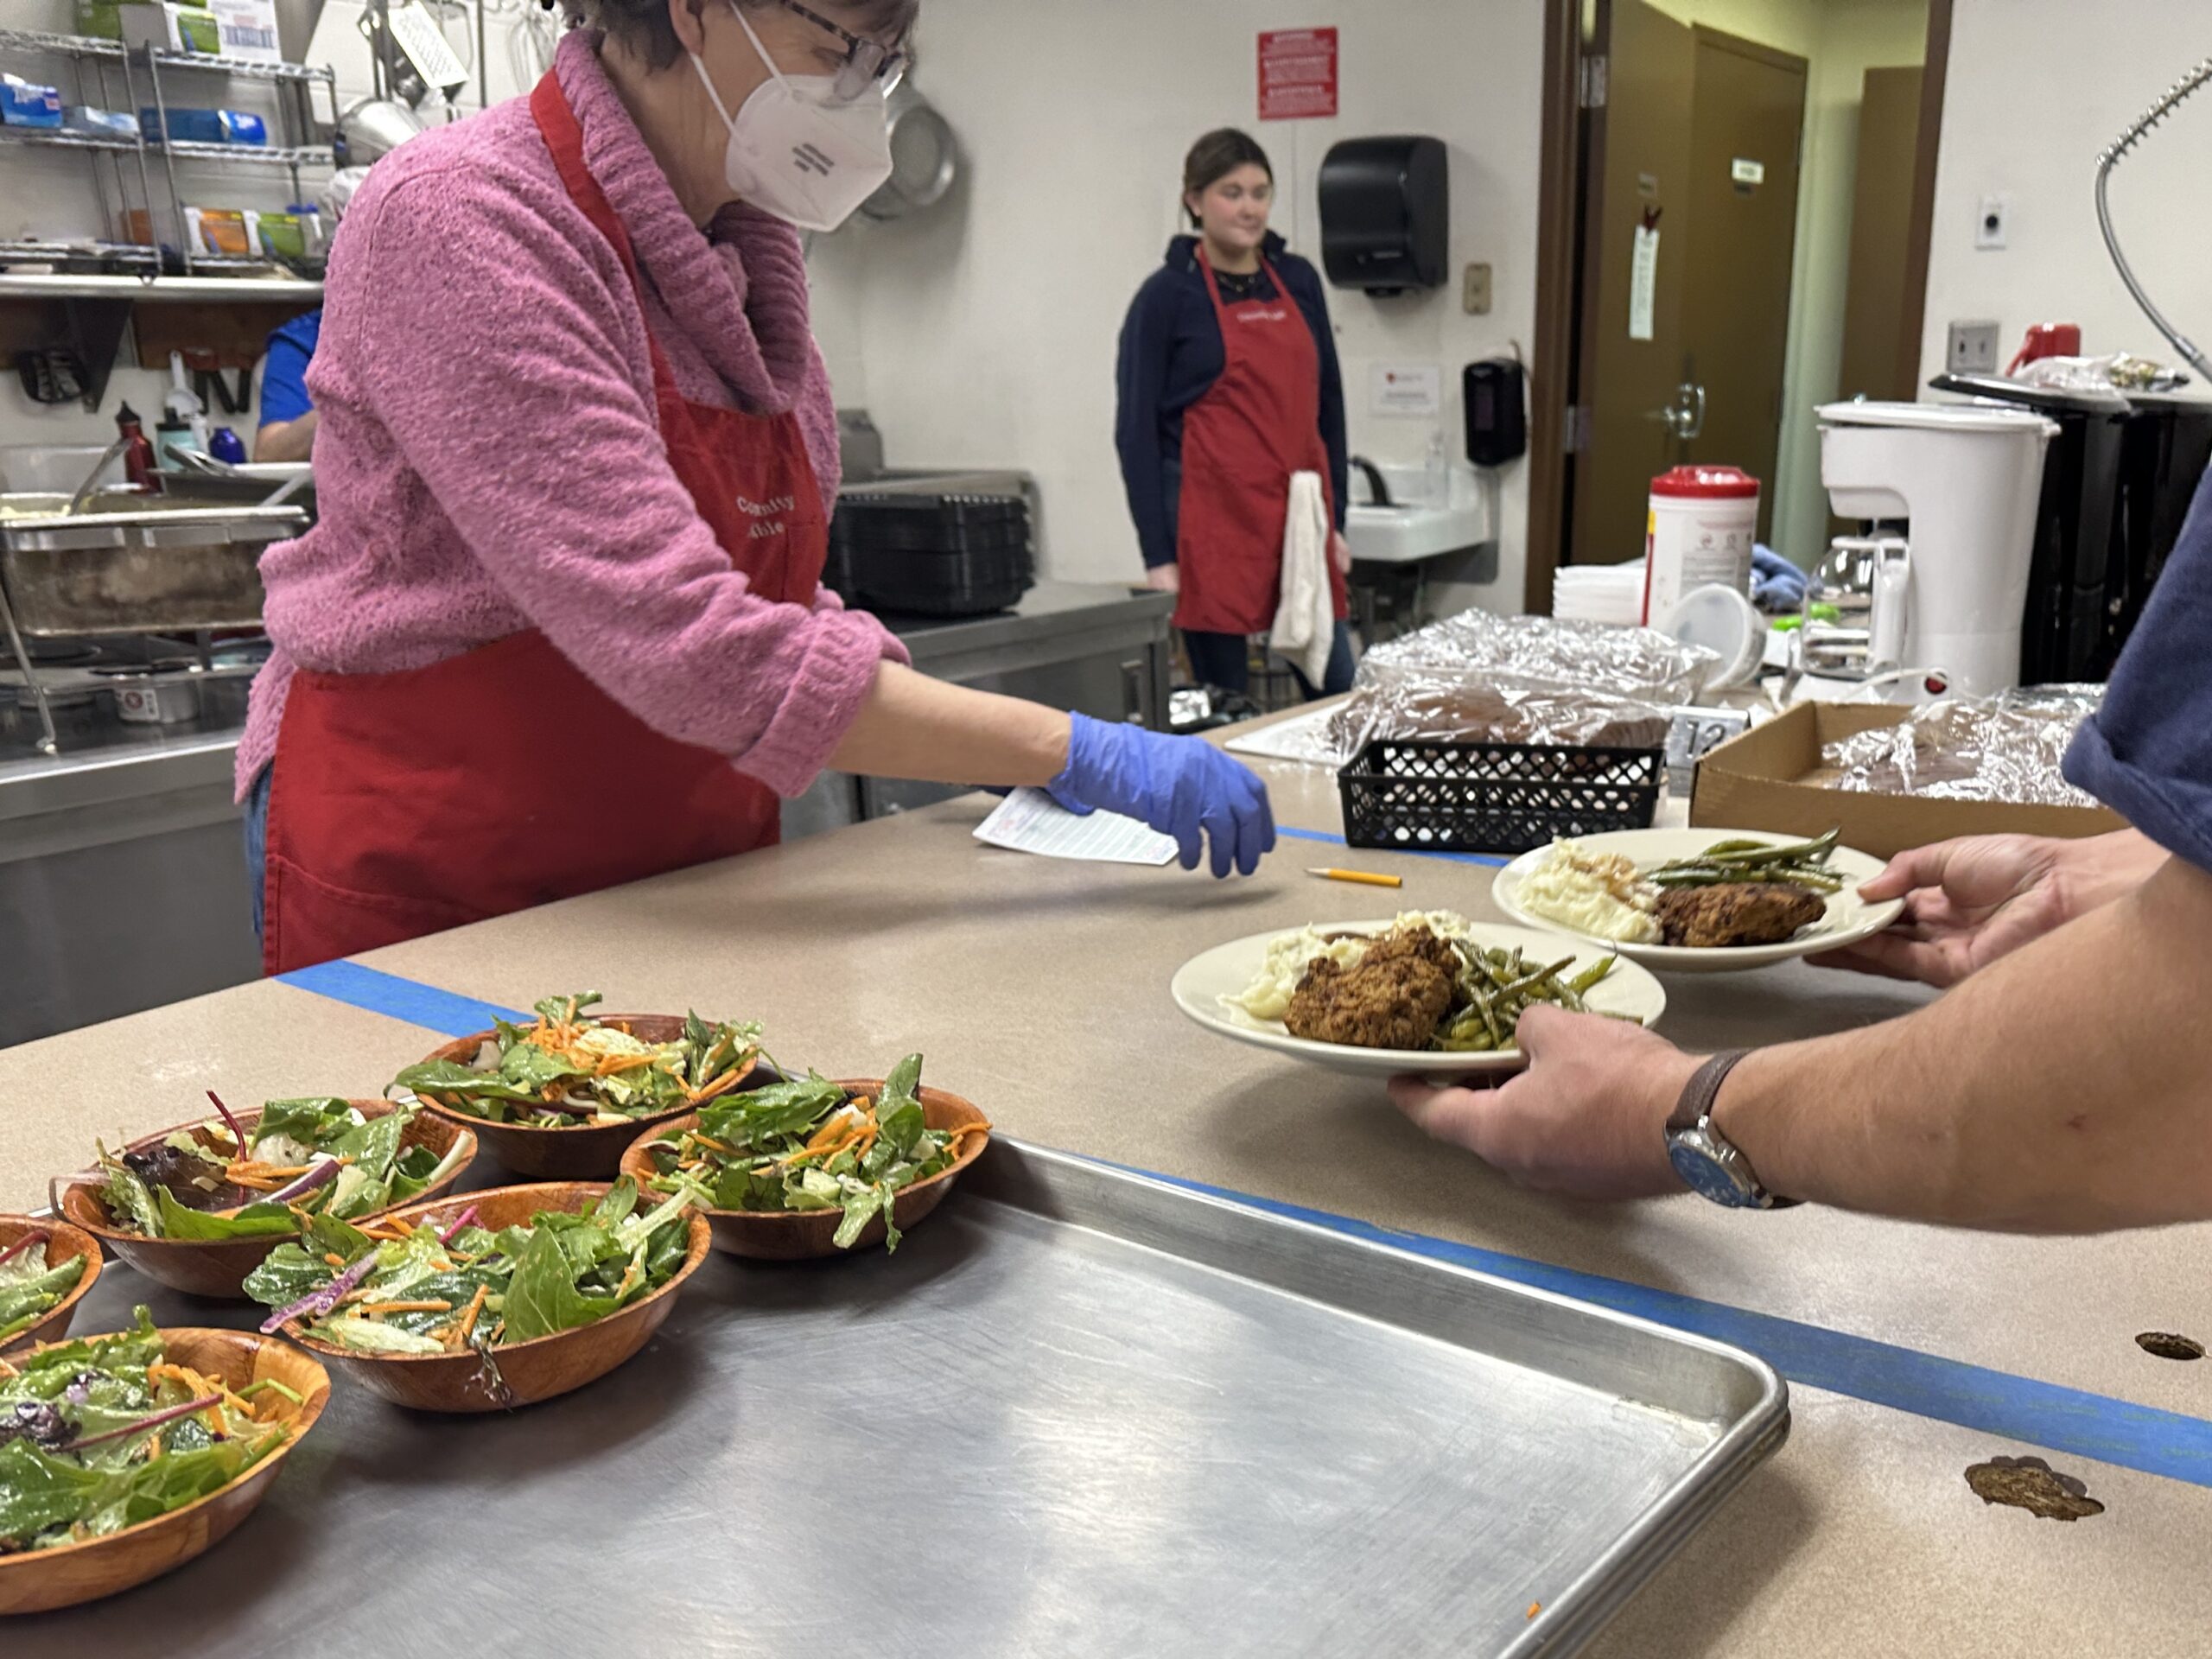 Wolfoods' Seasonal Work Opportunities: Flexible Food Service Jobs